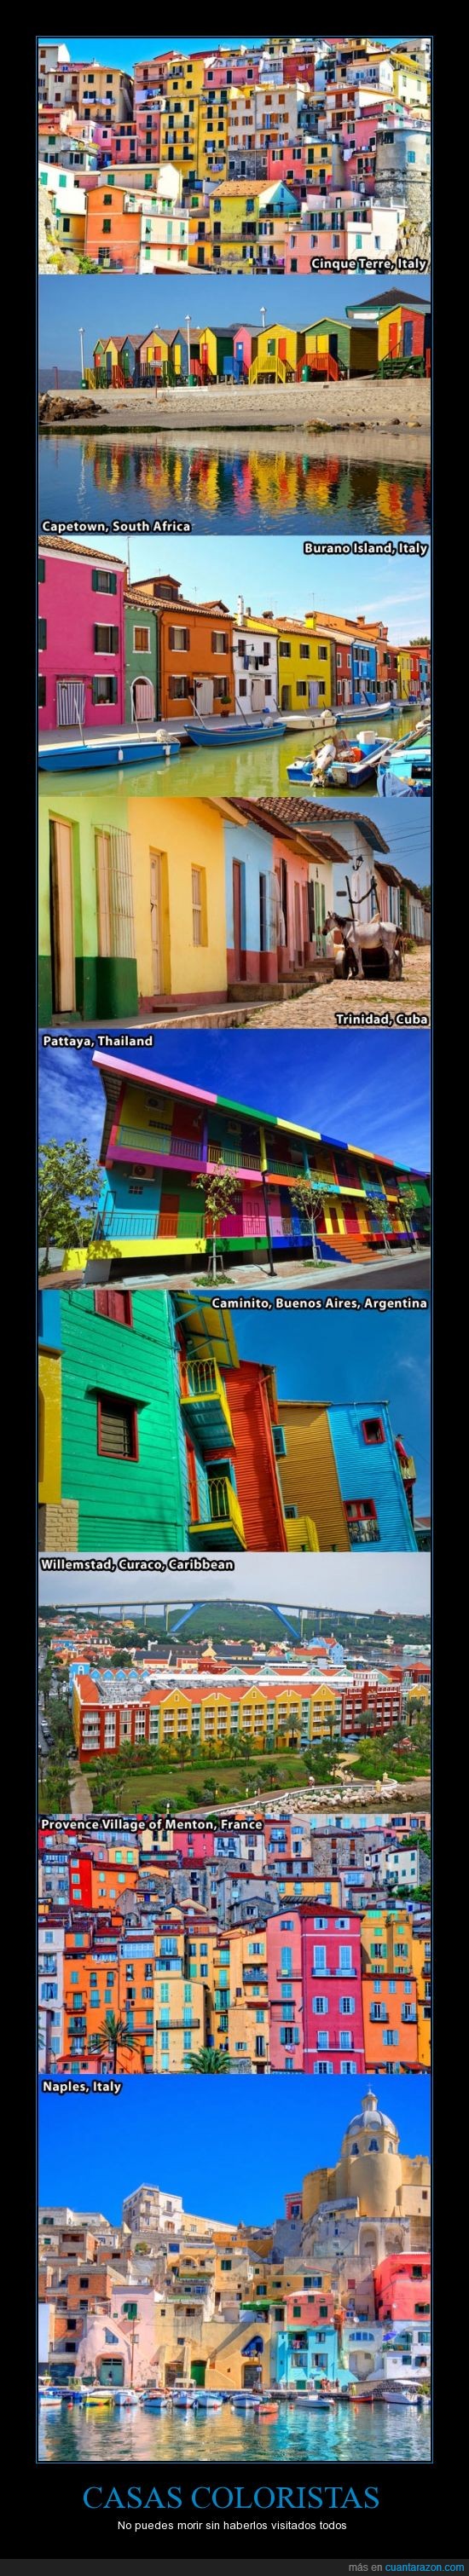 casas,ciudades,colores,colorido,molon,turismo